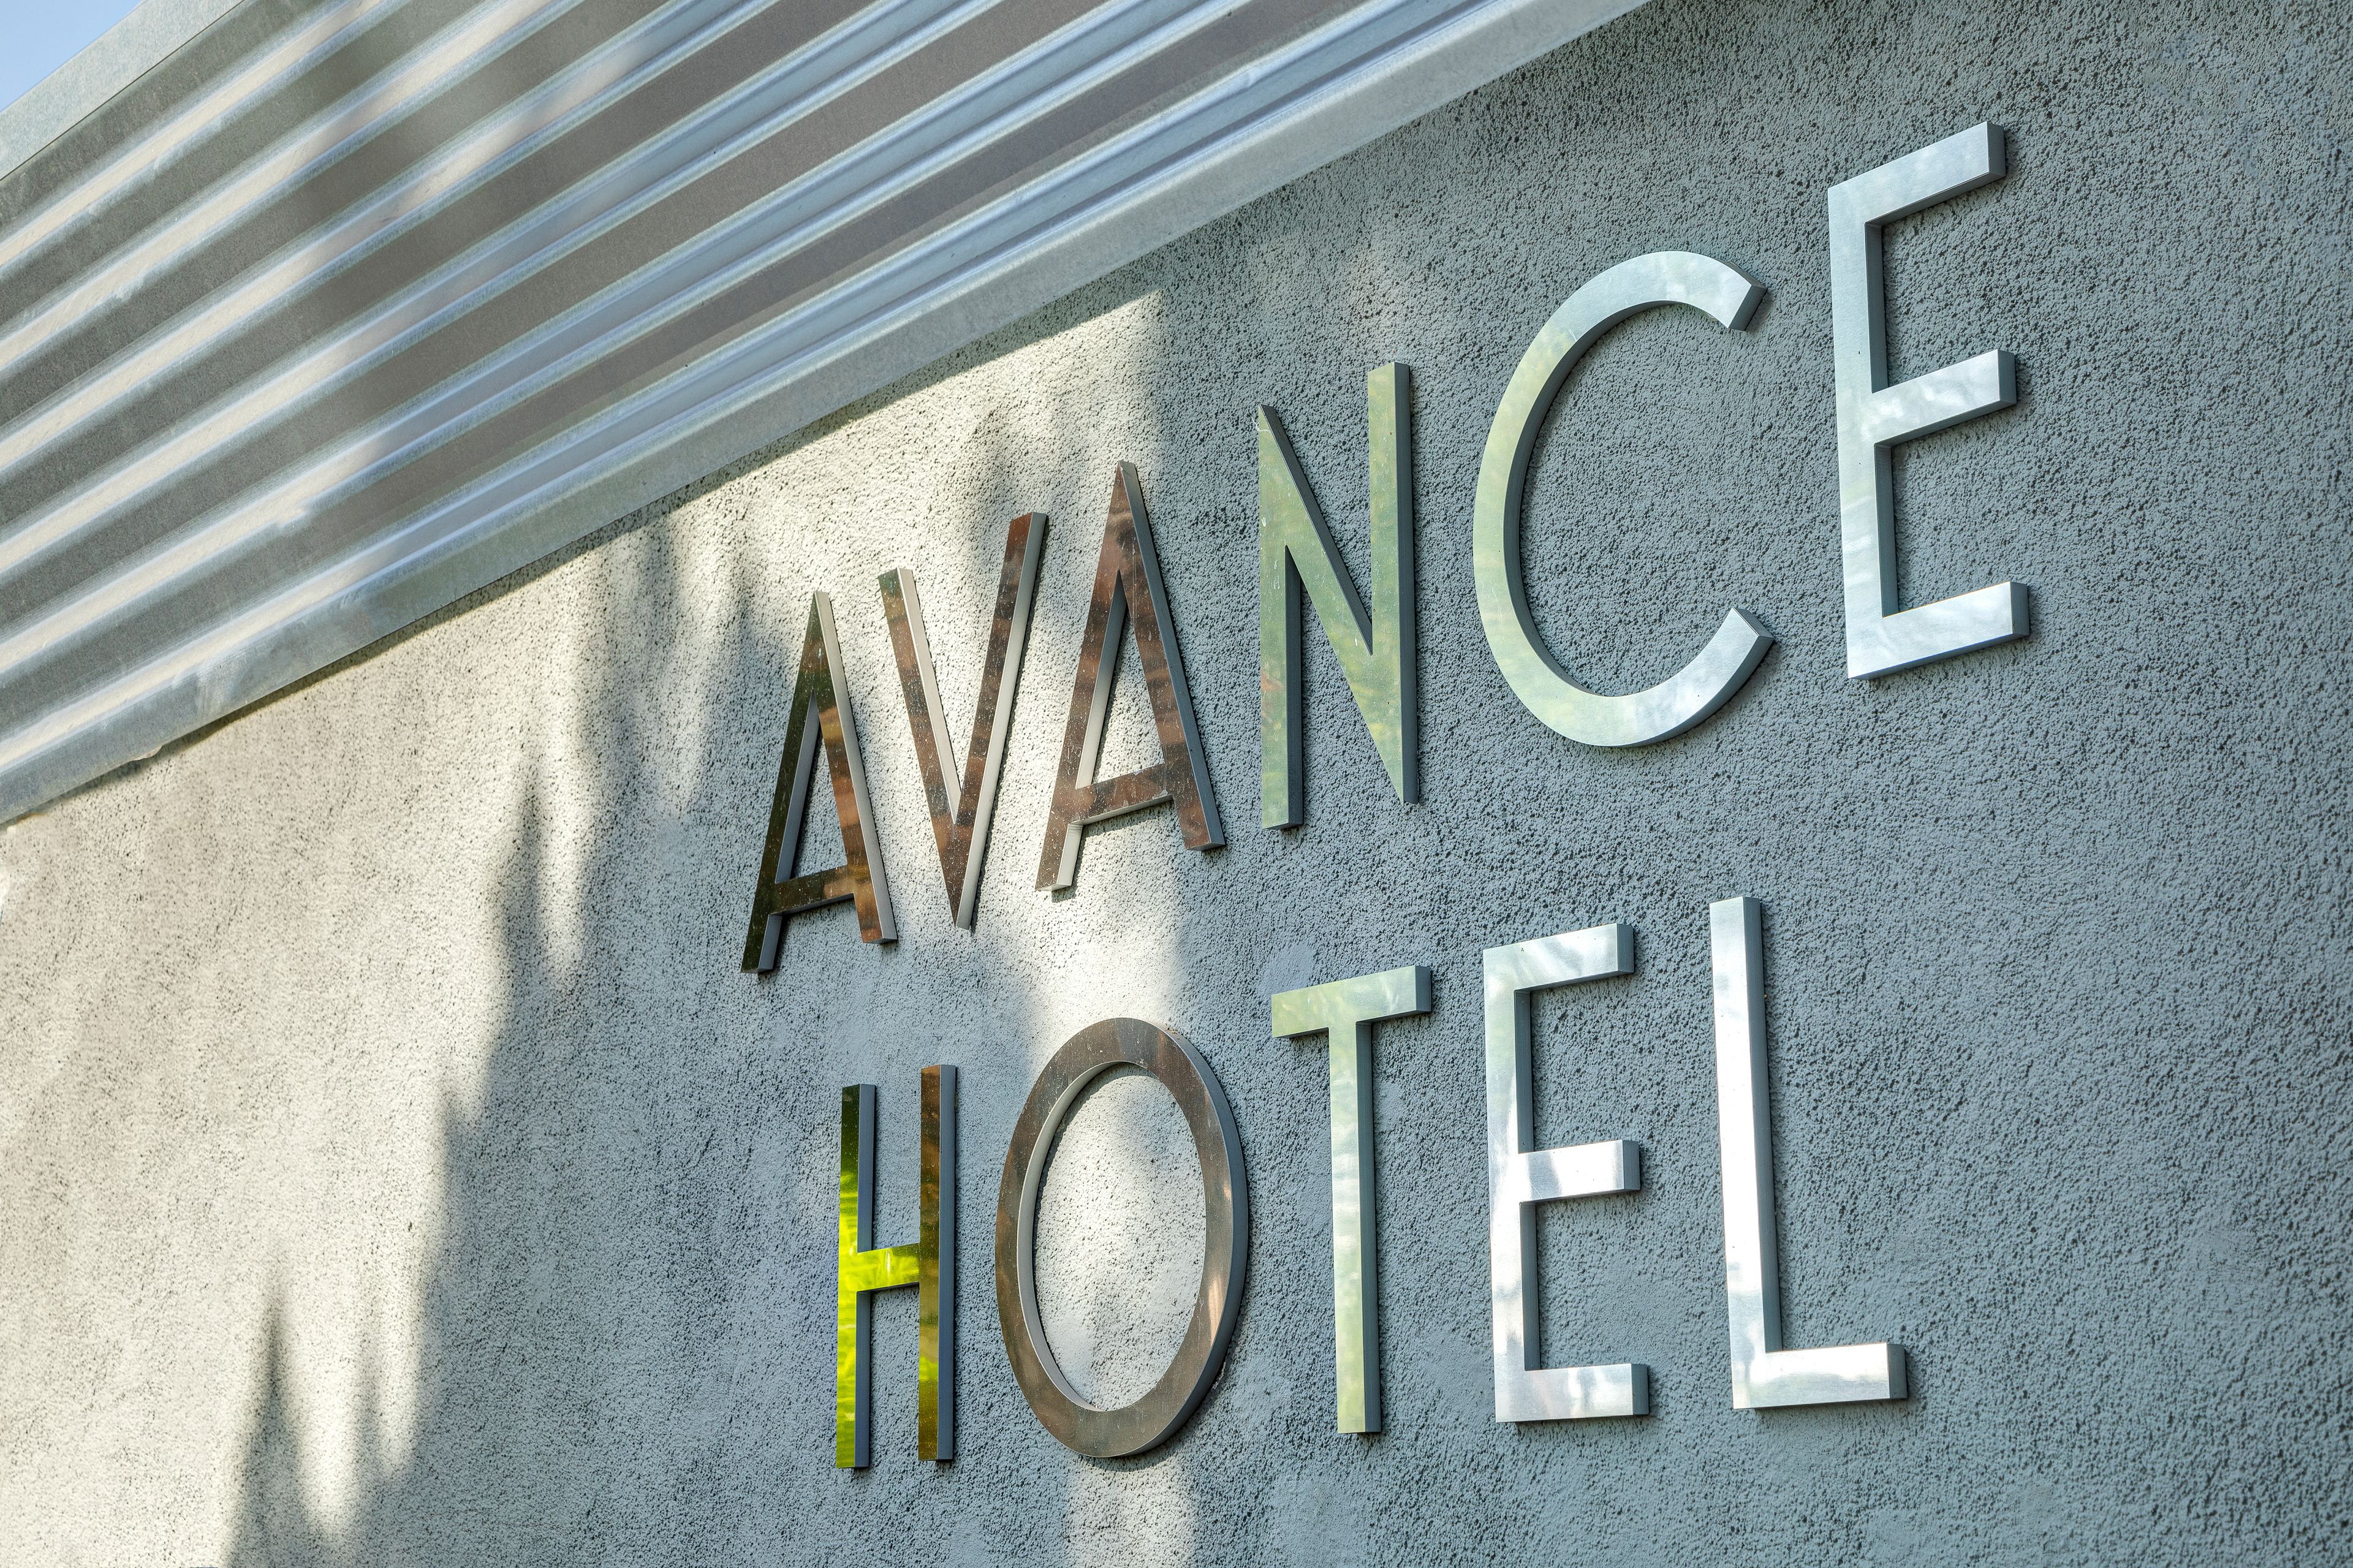 Avance Hotel